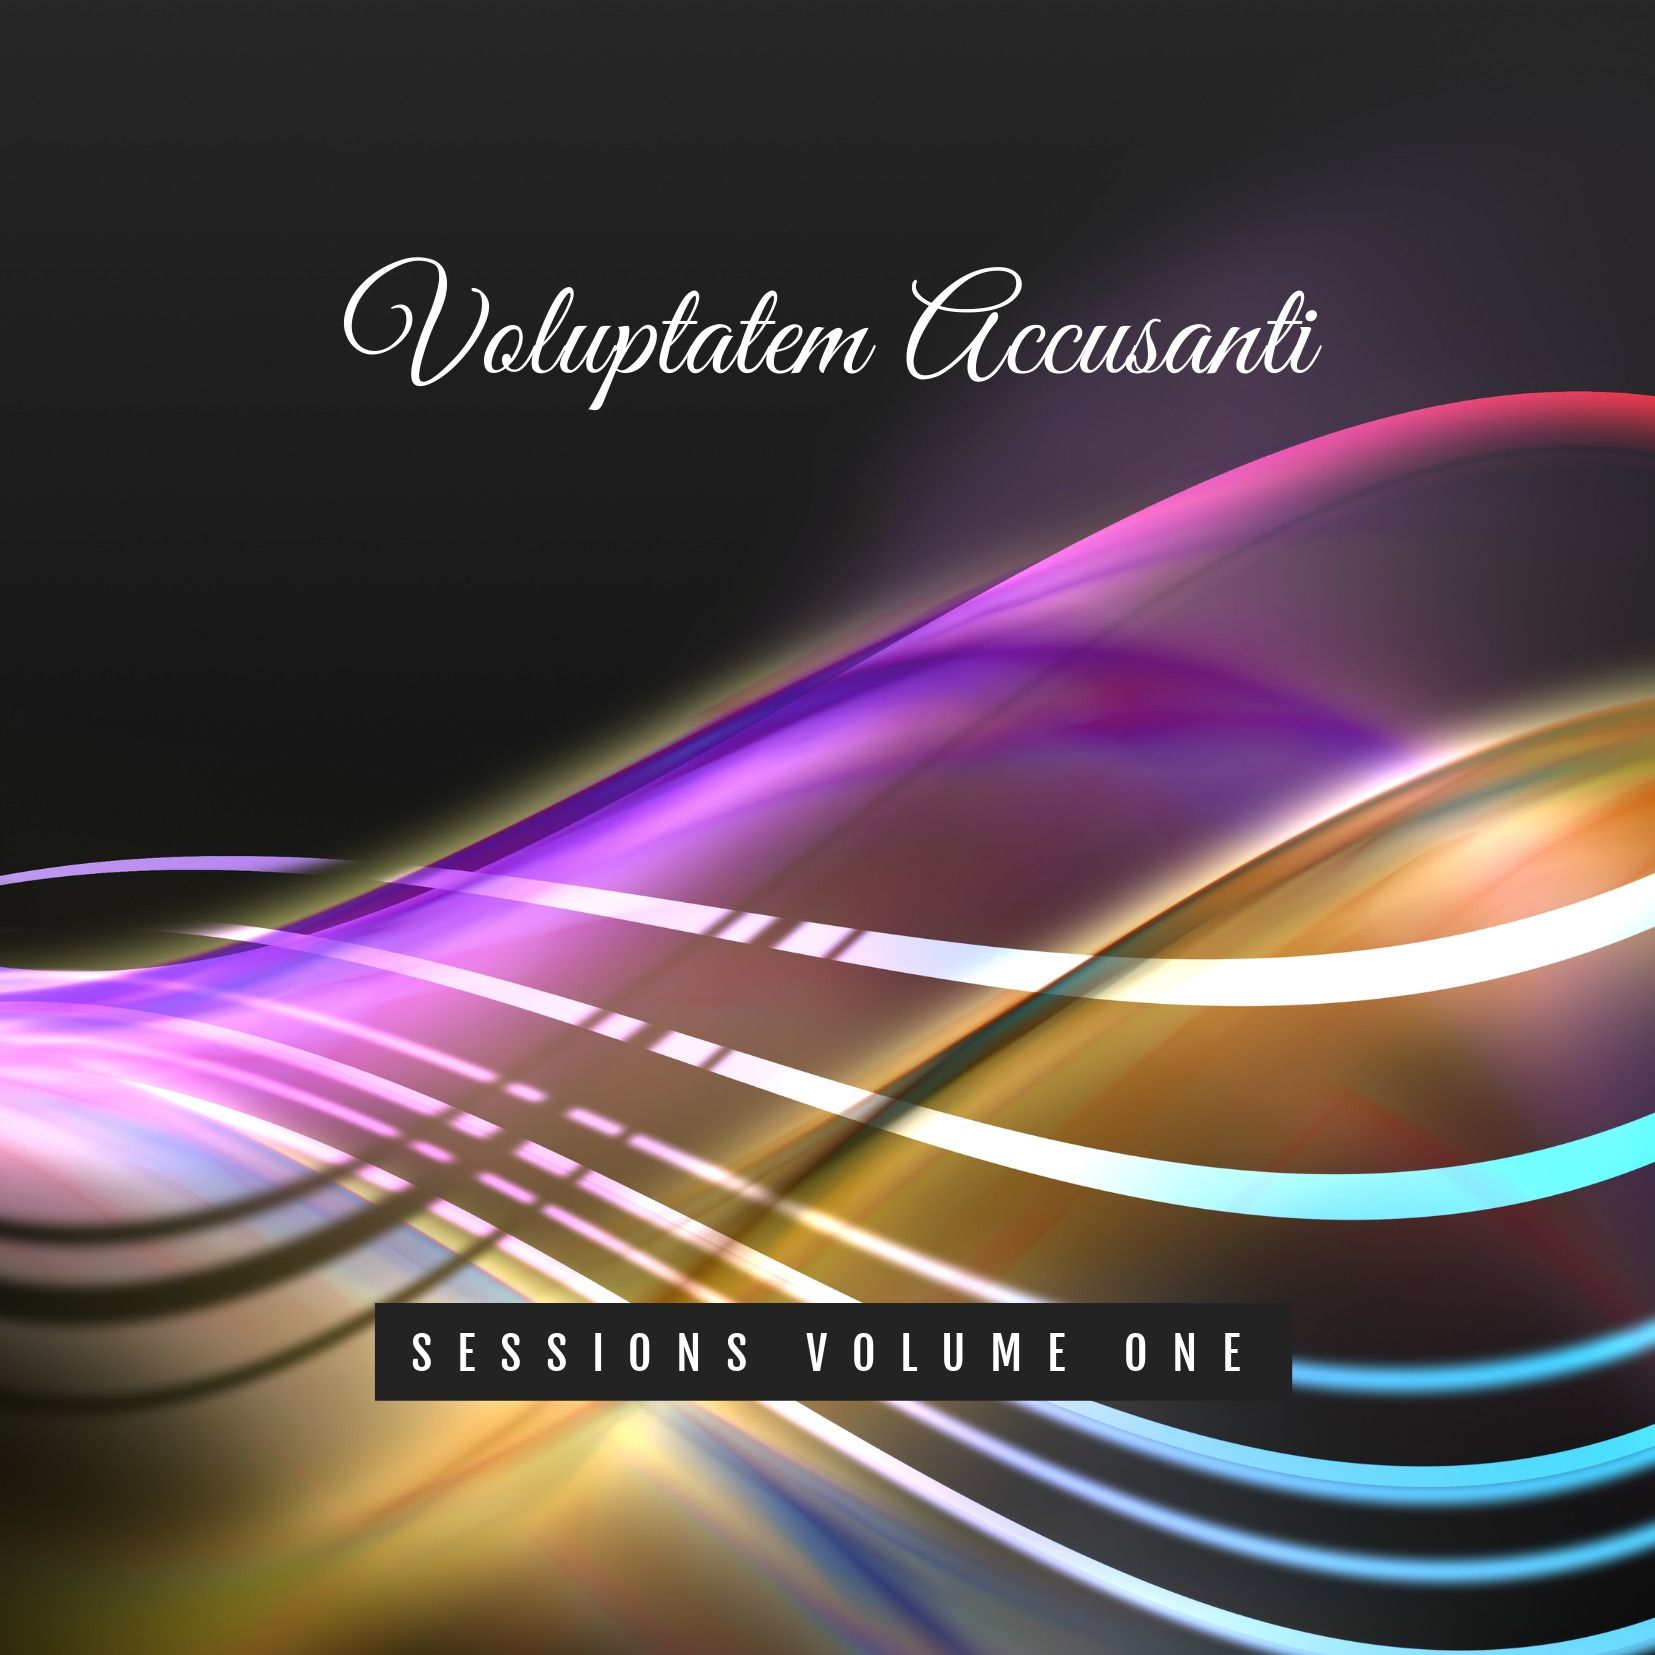 Purple and gold light on black background CD design - Color bursts in album cover design - Image